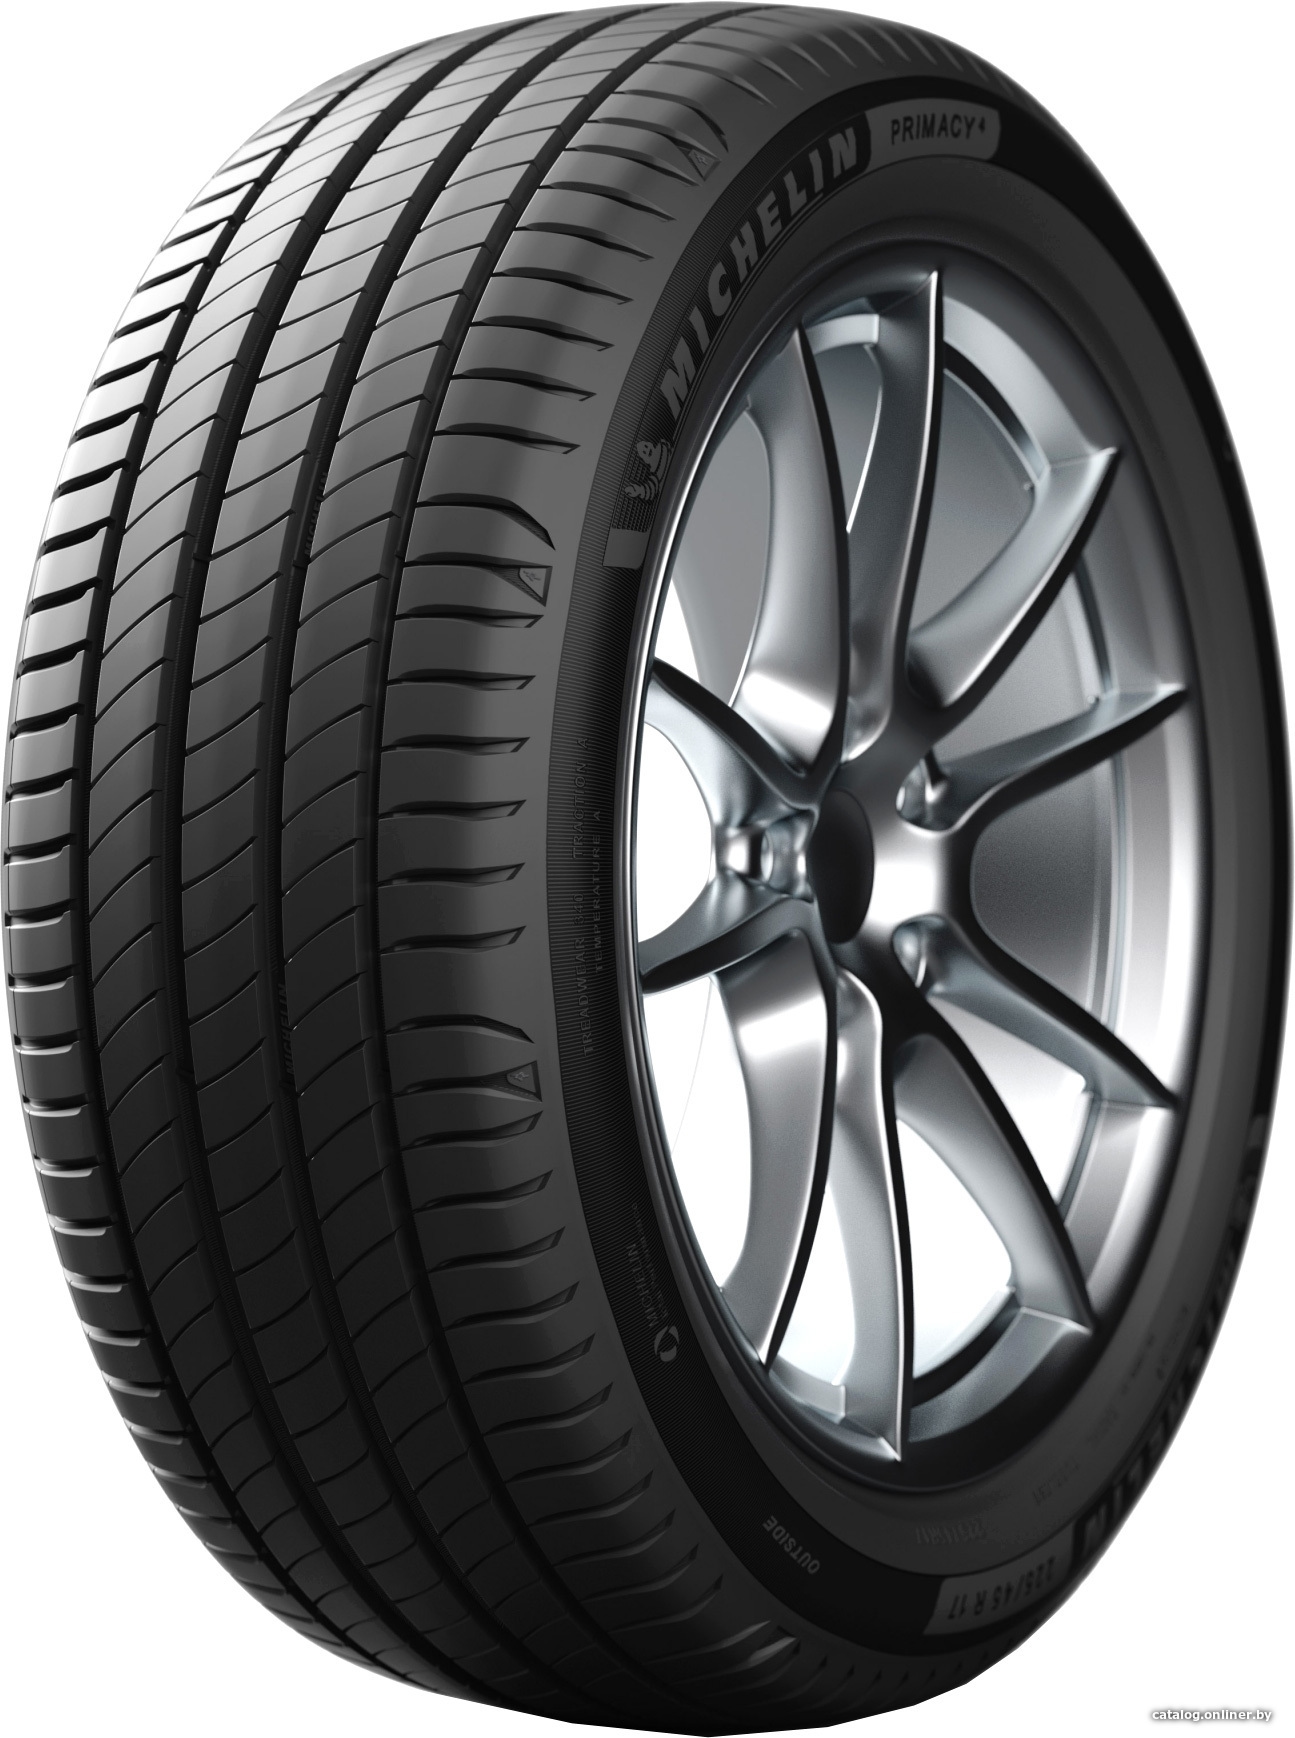 Автомобильные шины Michelin Primacy 4 215/50R17 95W